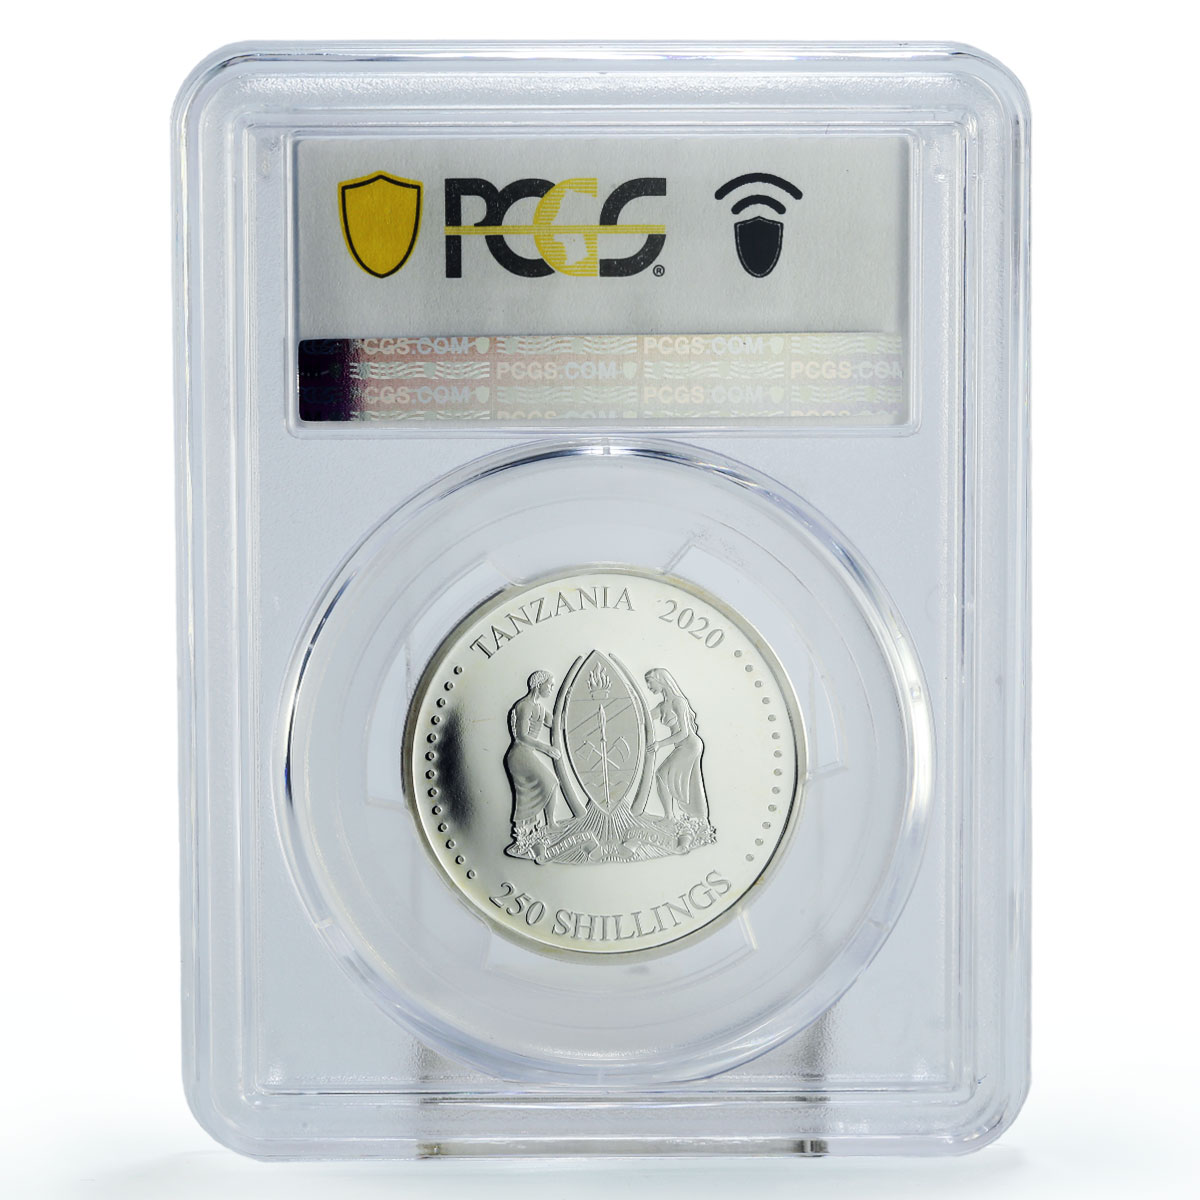 Tanzania 250 shillings Lunar Calendar Year of the Rat PR69 PCGS silver coin 2020